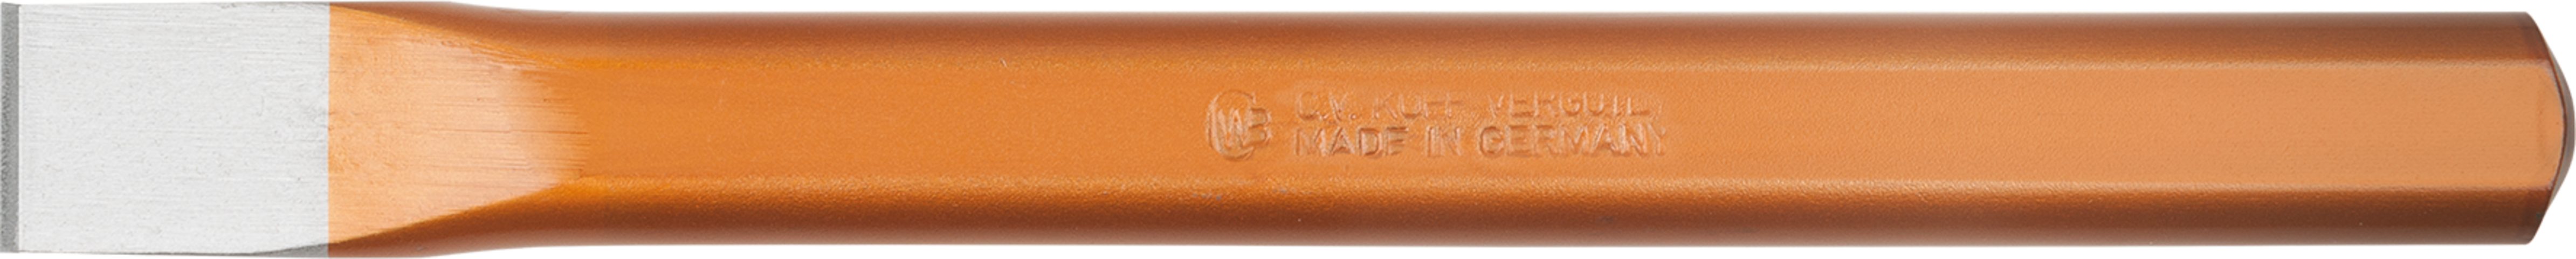 SW-STAHL Flachmeißel 94504L mm Chrom-Vanadium-Stahl, aus Flachmeißel (1-tlg) lackiert 250